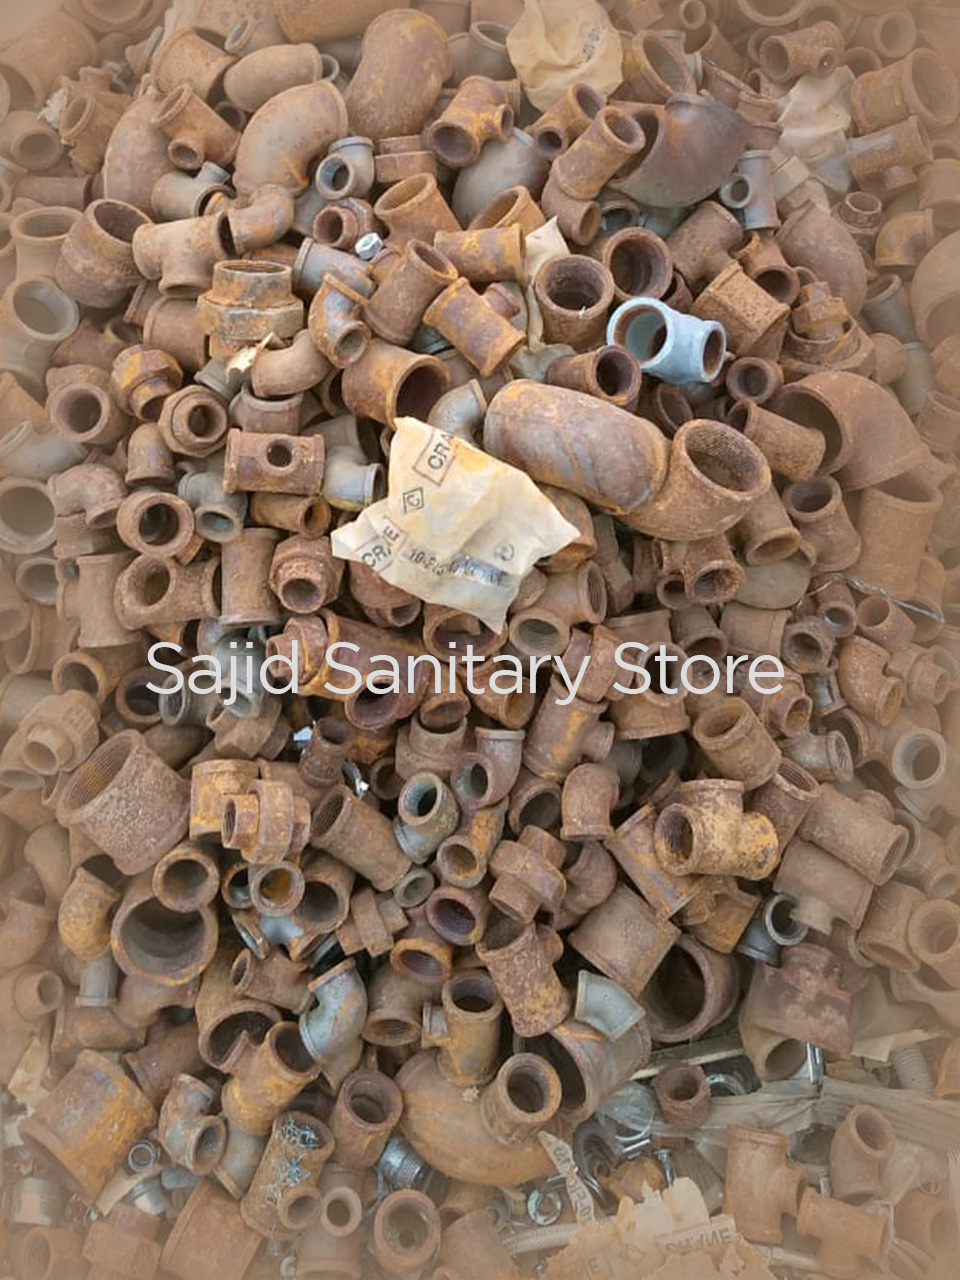 Sajid Abdul latif Sanitary Store (G.I Fittings Only)